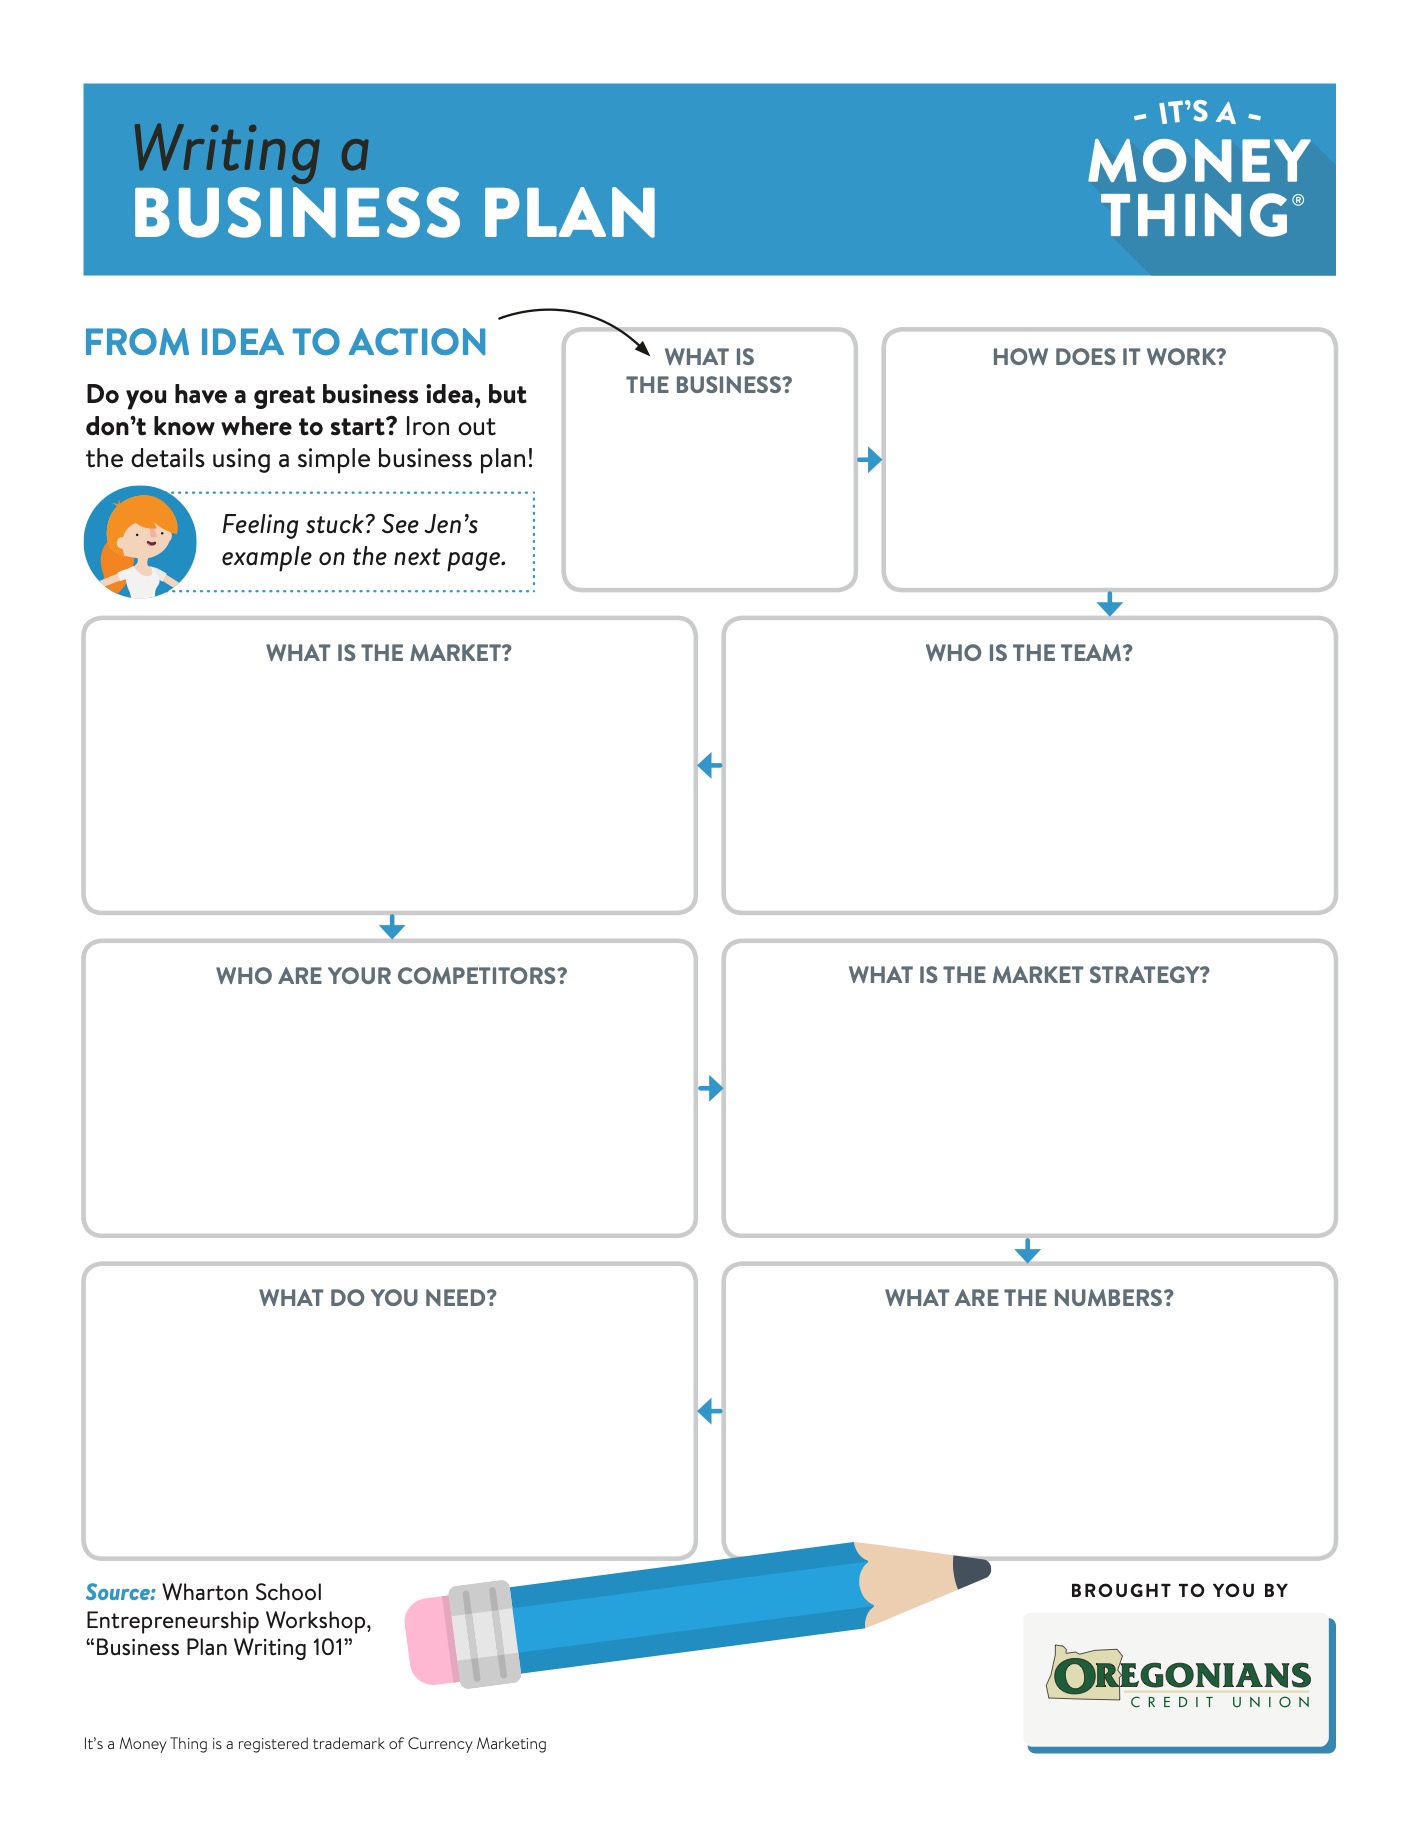 Writing a Business Plan template checklist